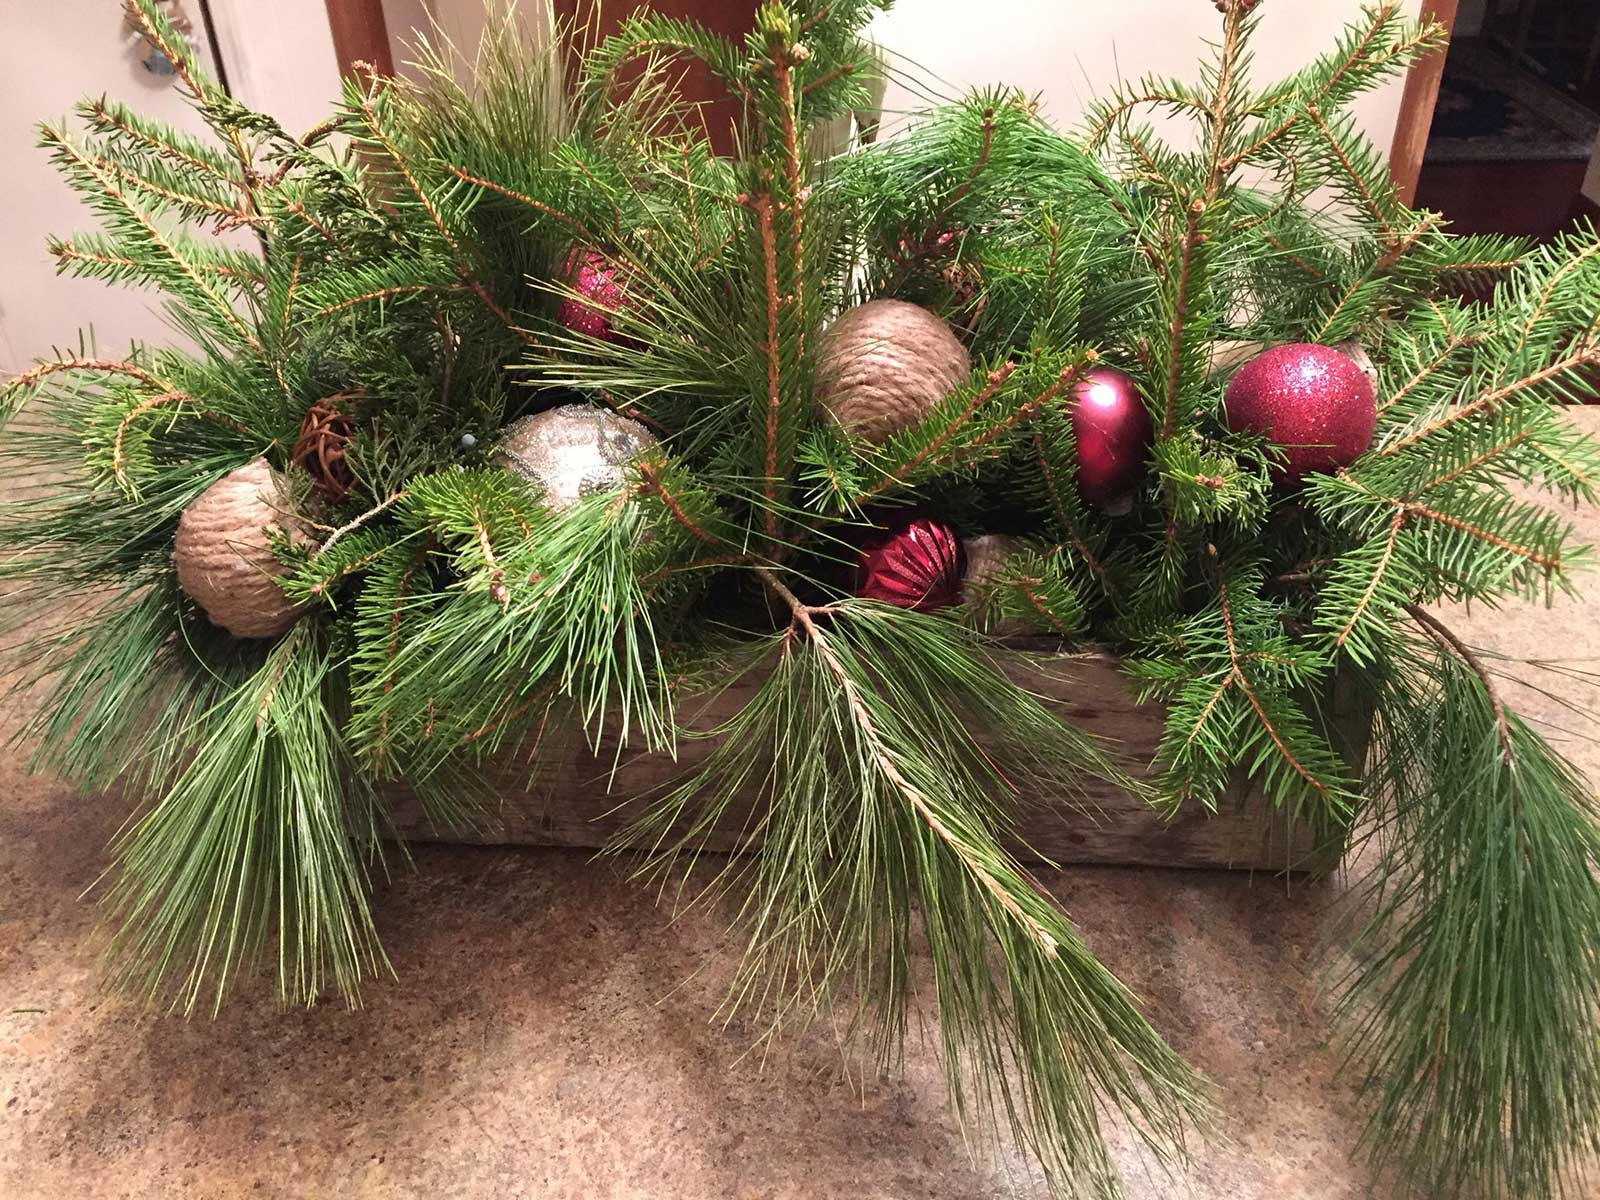 Christmas Log with Balls Bows and Greens